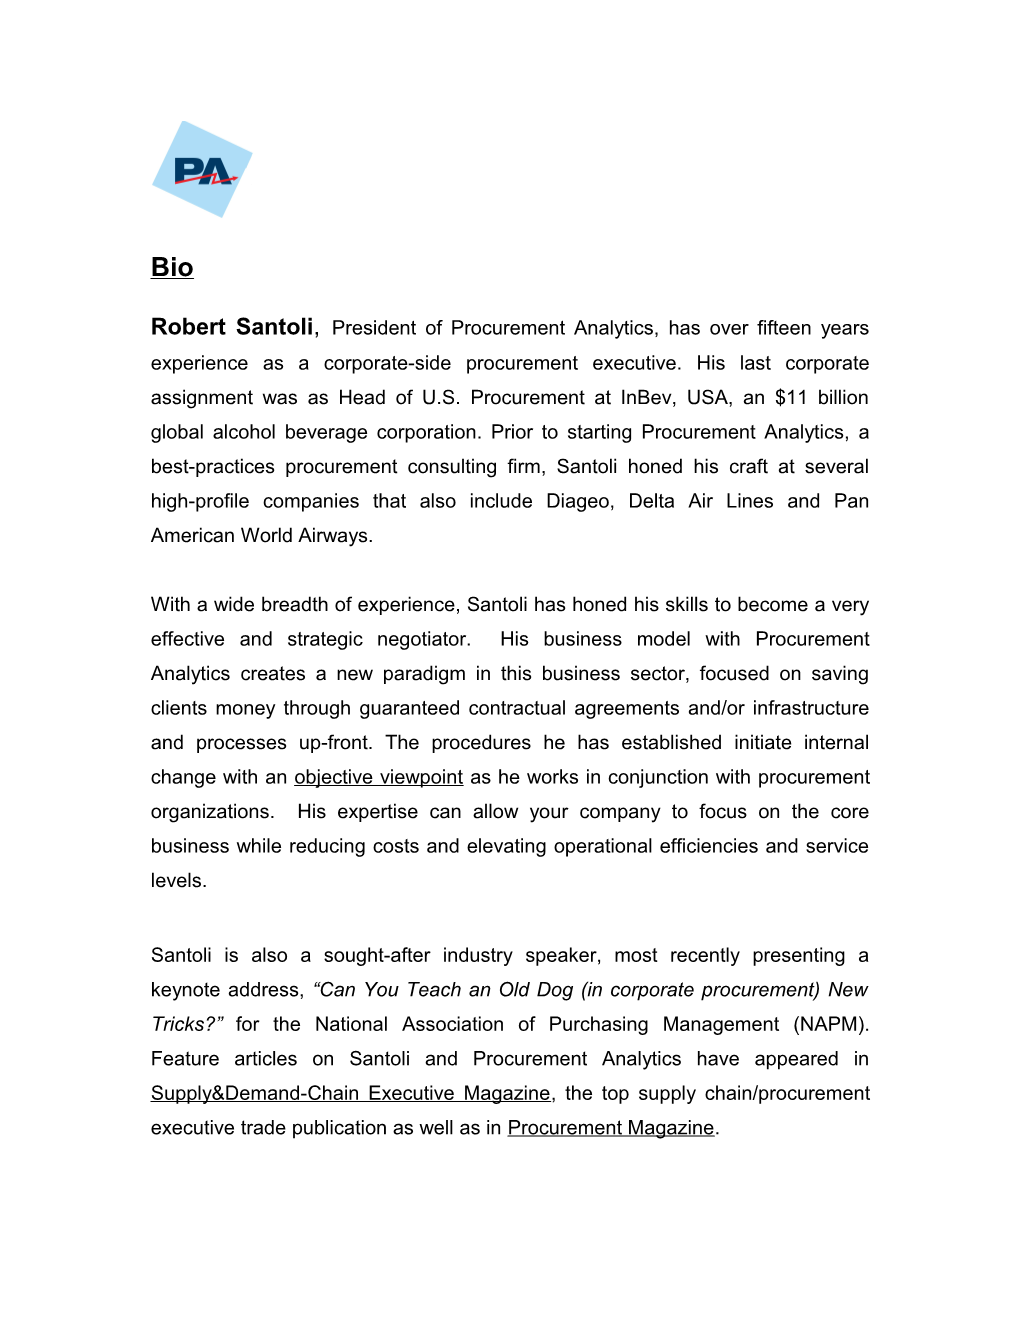 Robert Santoli, President of Procurement Analytics, Has Over Fifteen Years Experience As